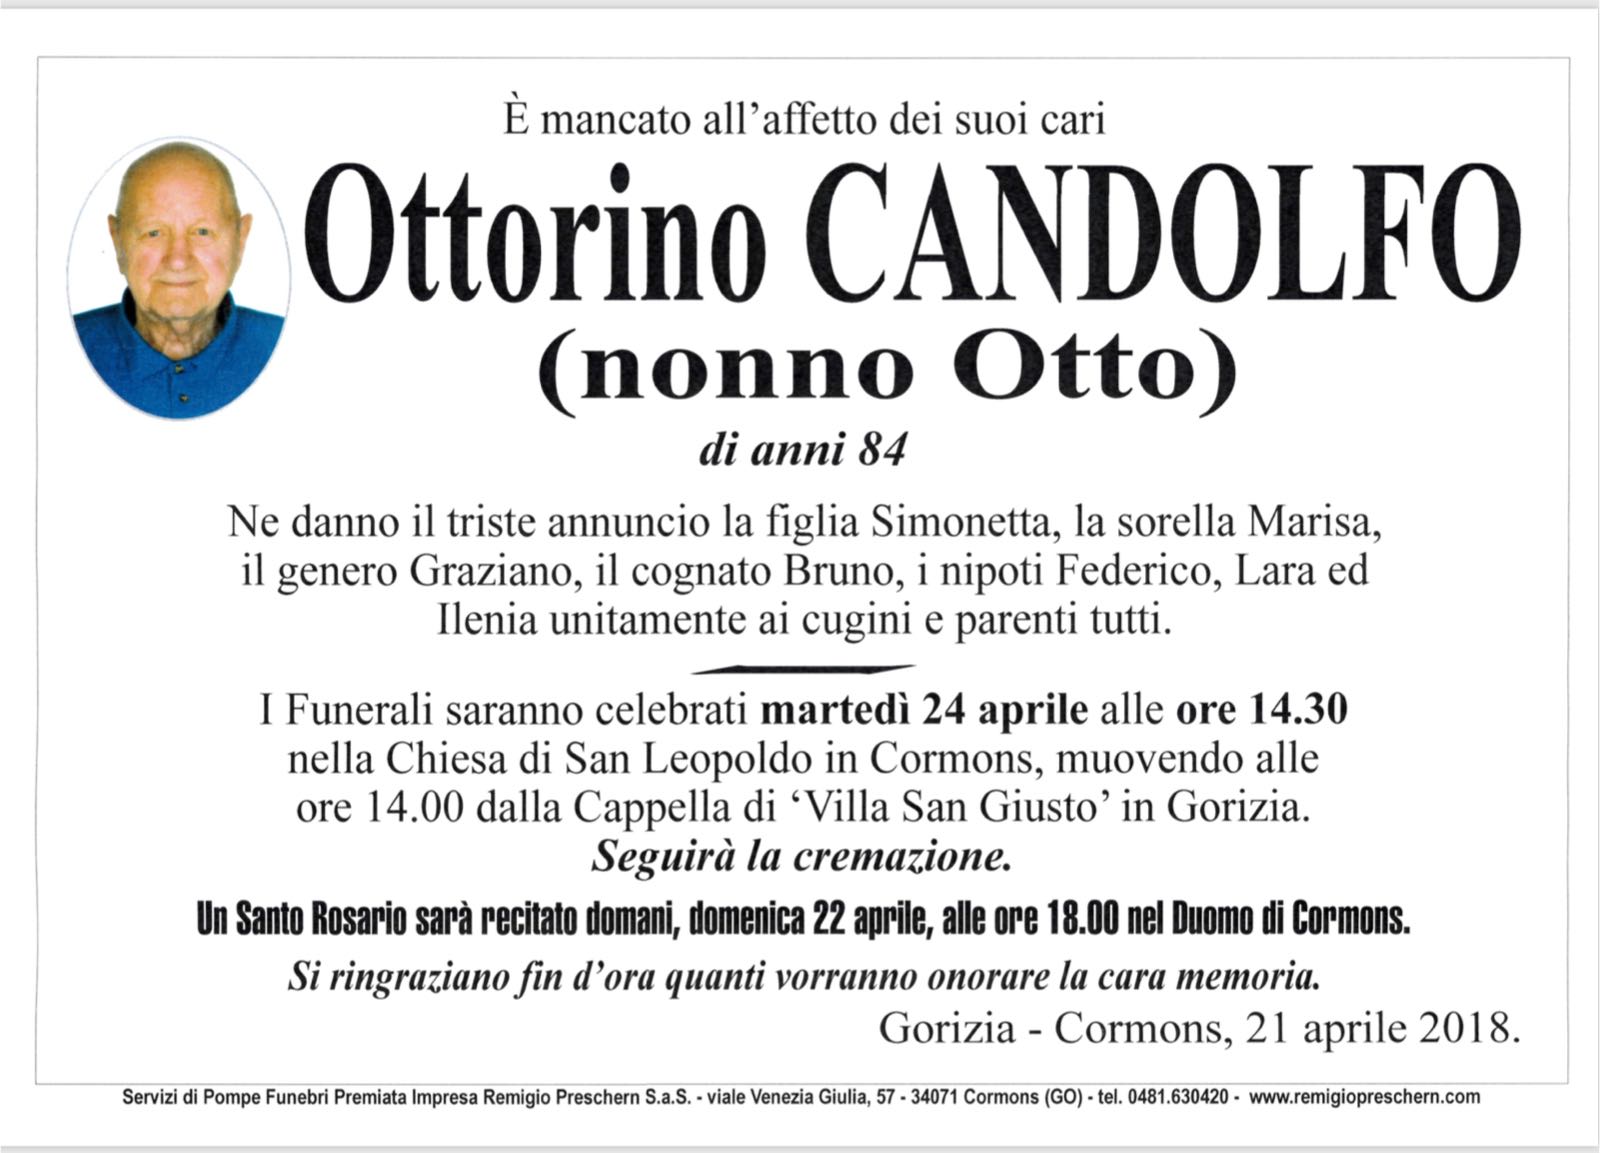 Ottorino Candolfo